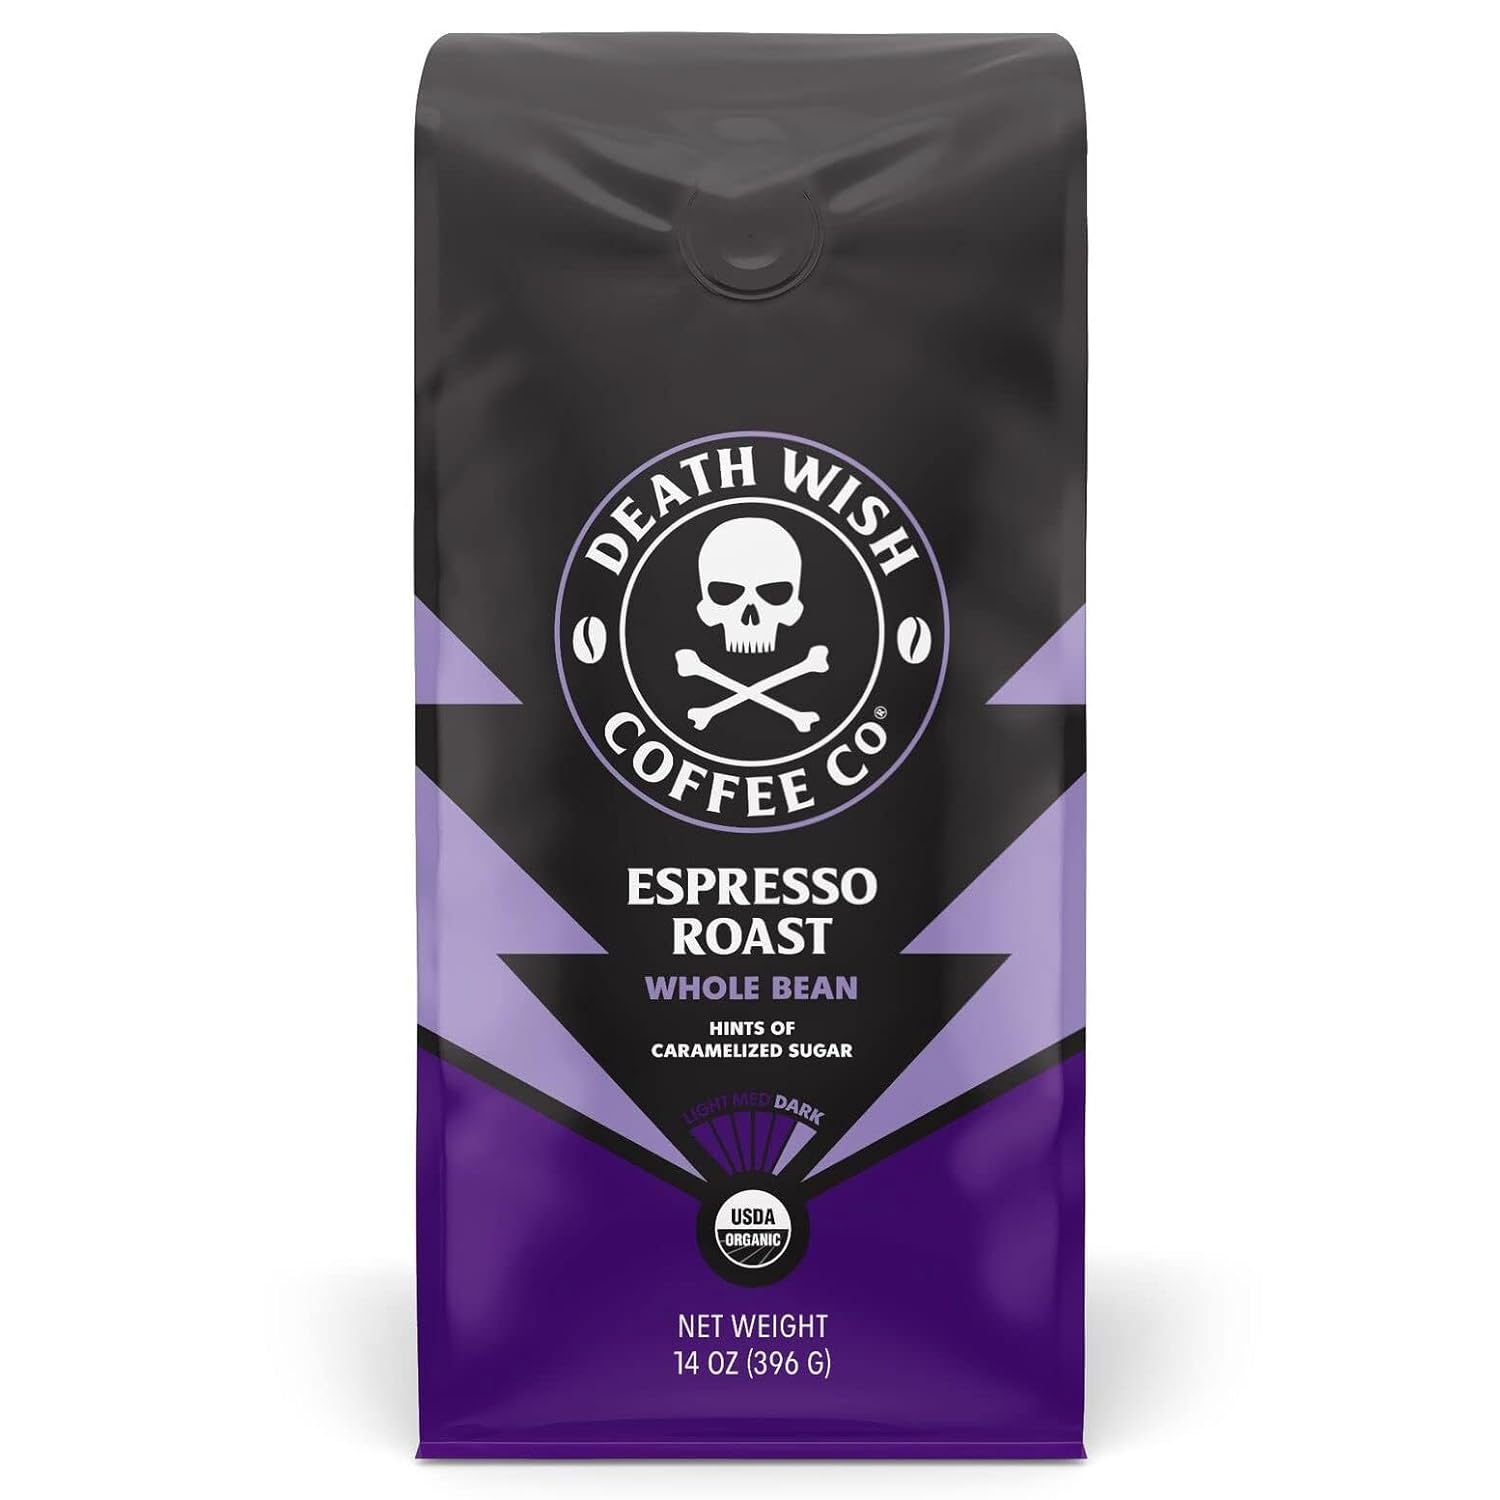 Death Wish Coffee Co. Whole Bean Espresso Roast - Extra Kick of Caffeine - Organic, Fair Trade, Arabica and Robusta Coffee Beans, 14 ounce (Pack of 1)